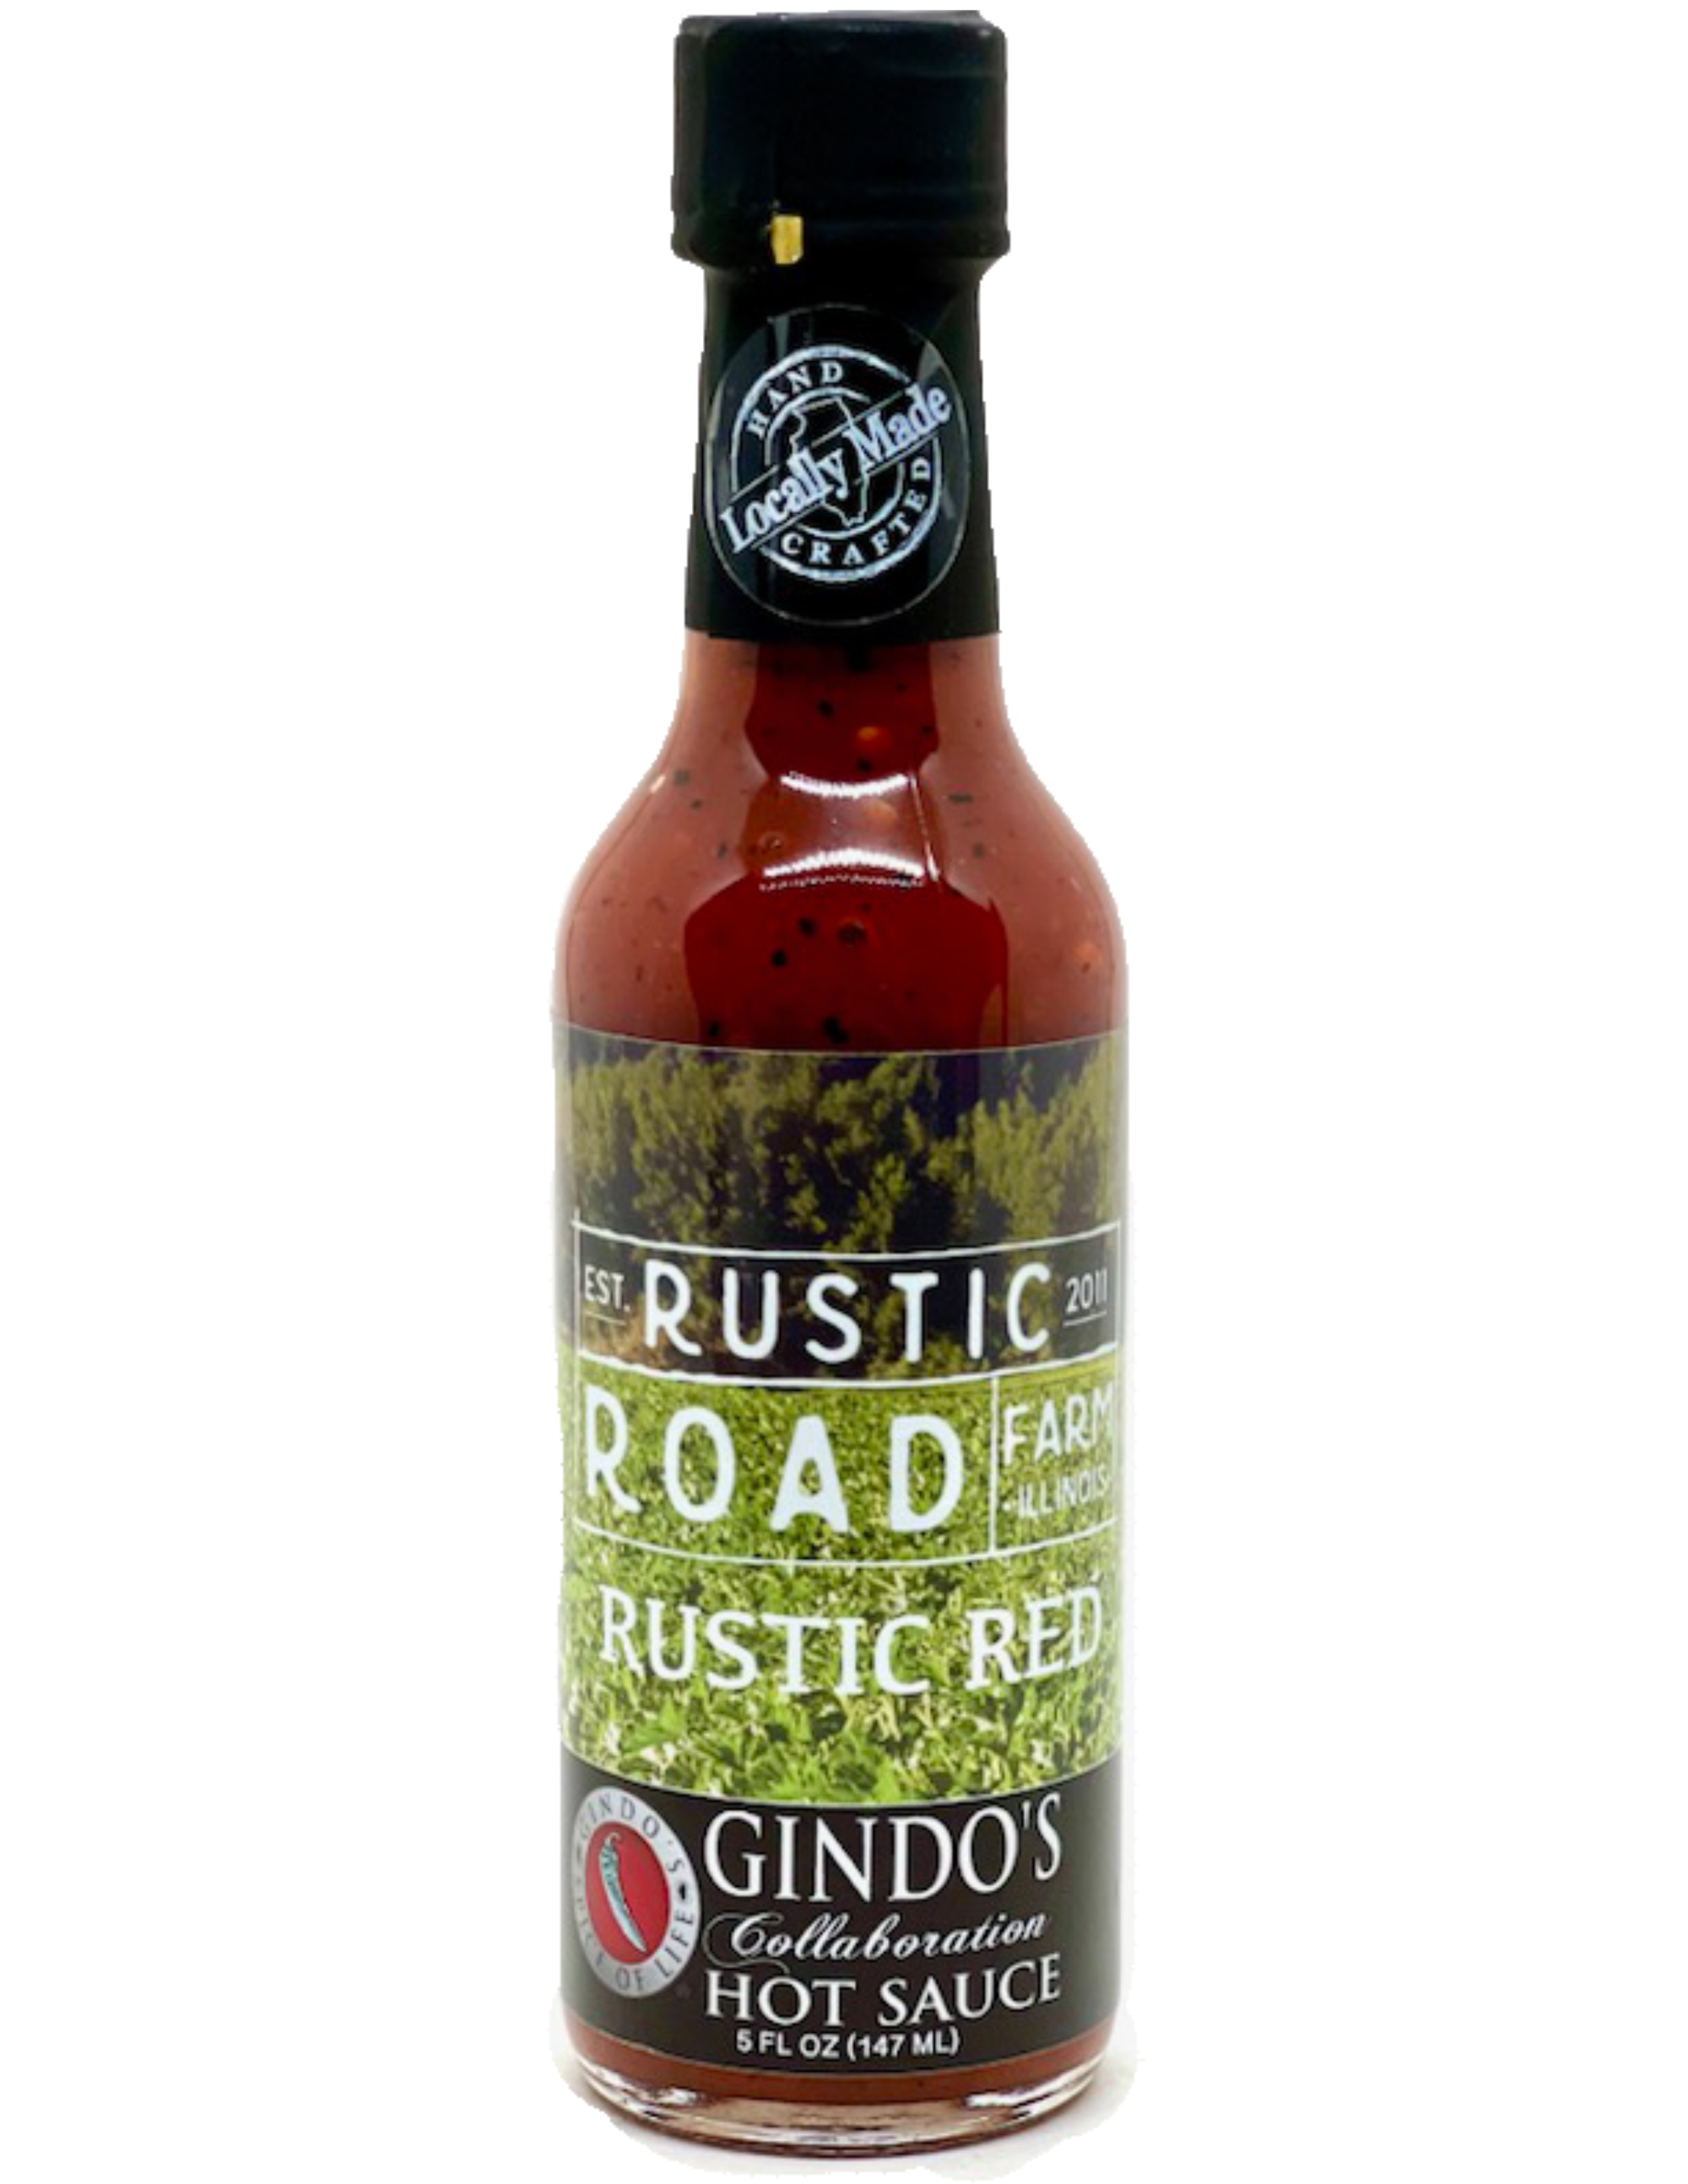 Rustic Red Hot Sauce